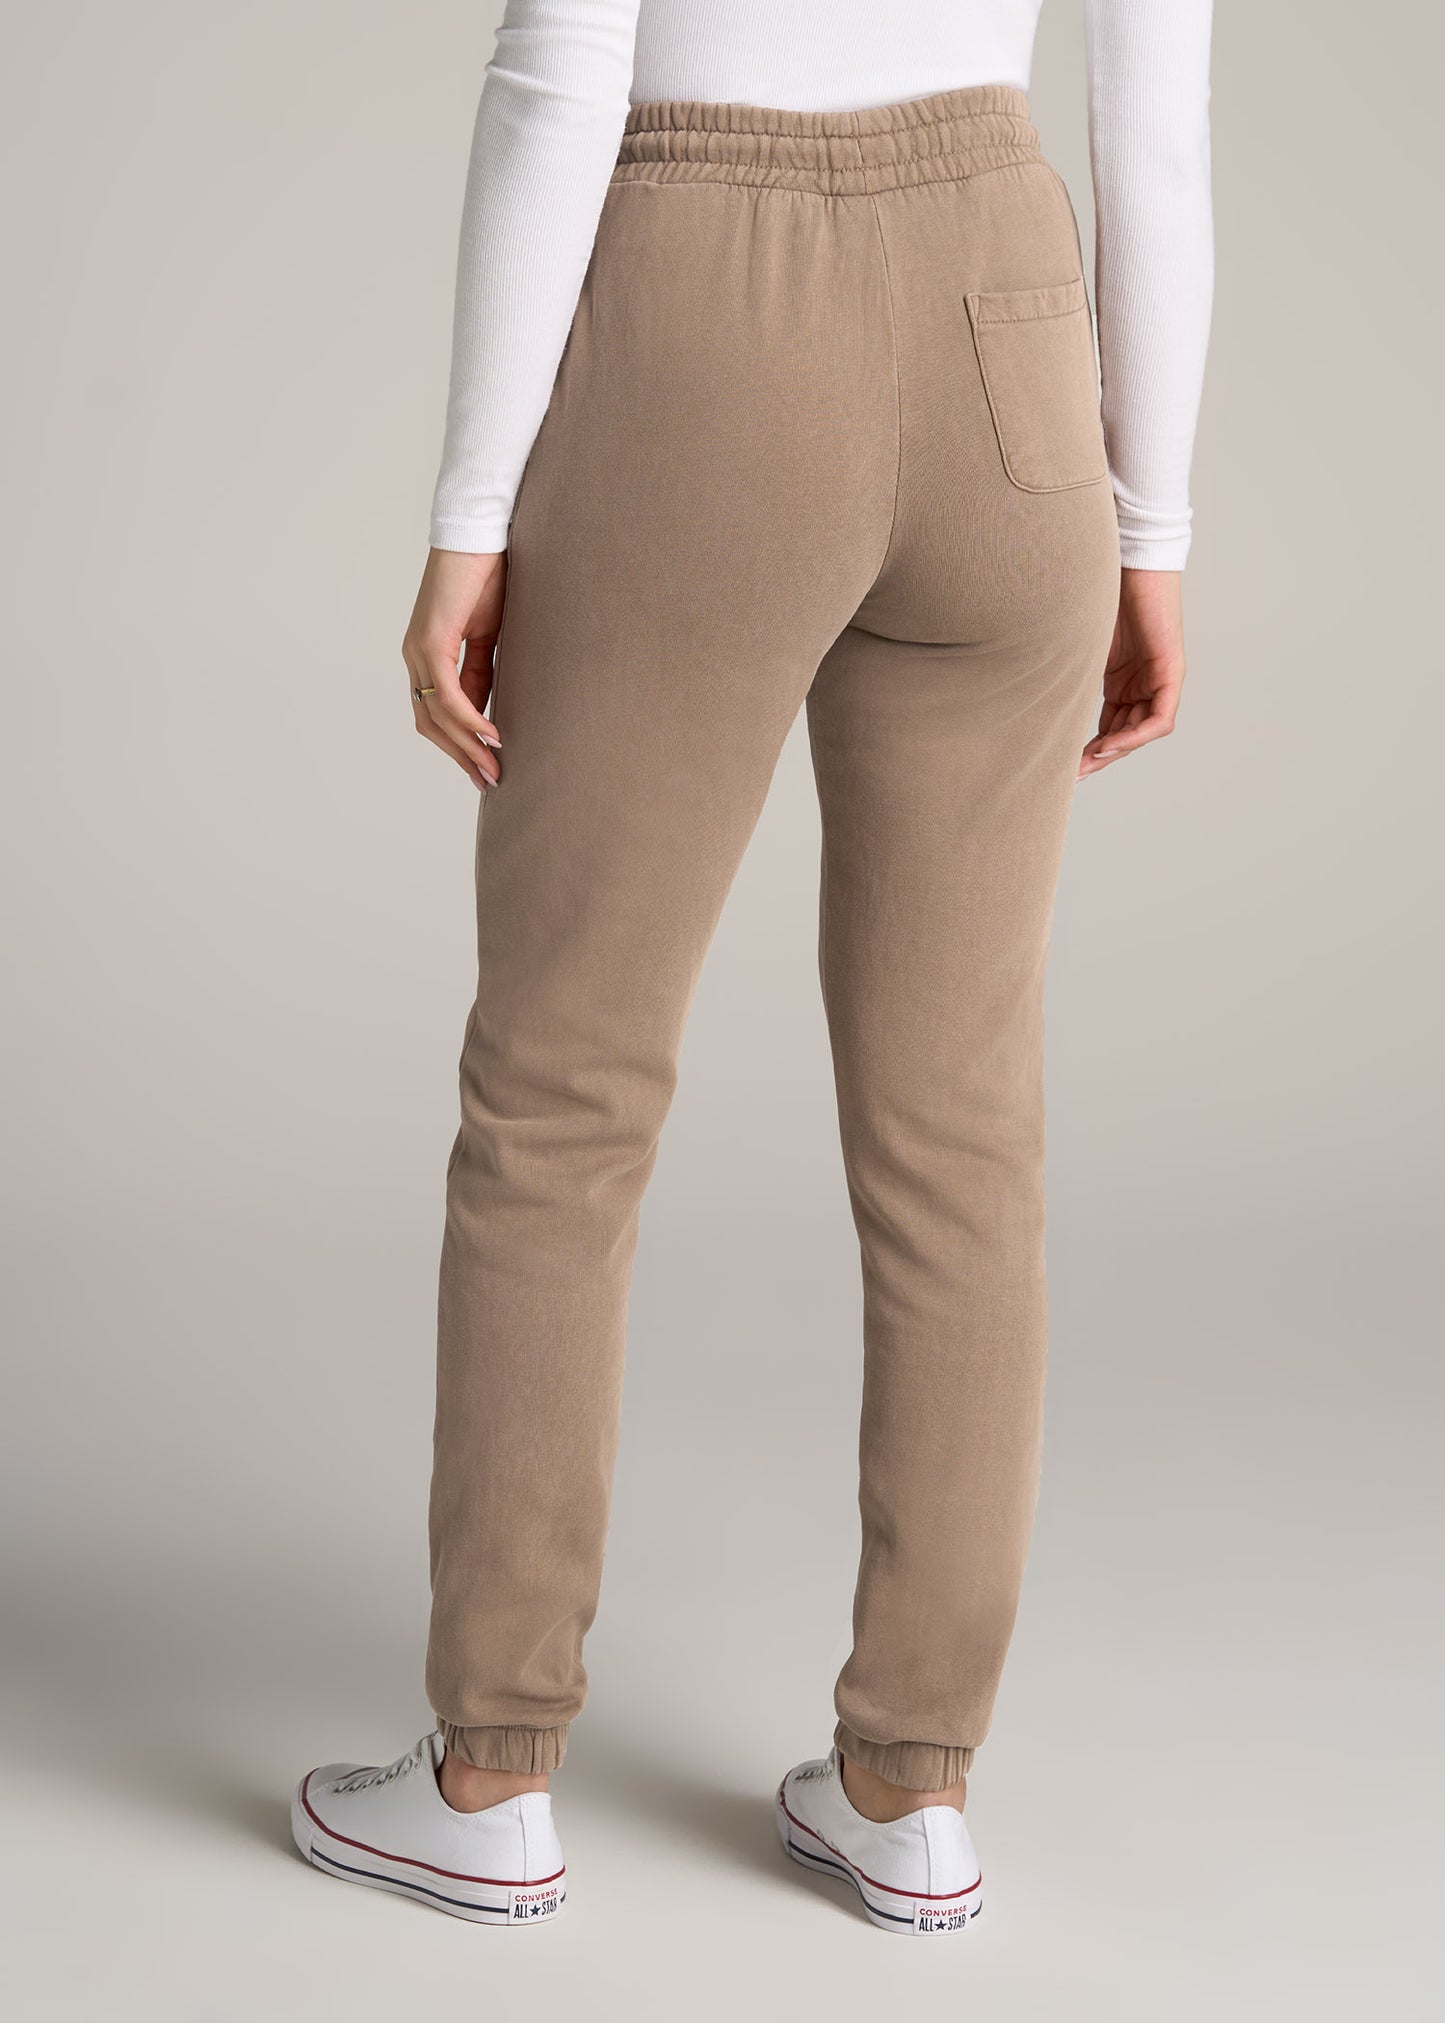 Buy Converse Women's All Star Pants Multi-Color in KSA -SSS